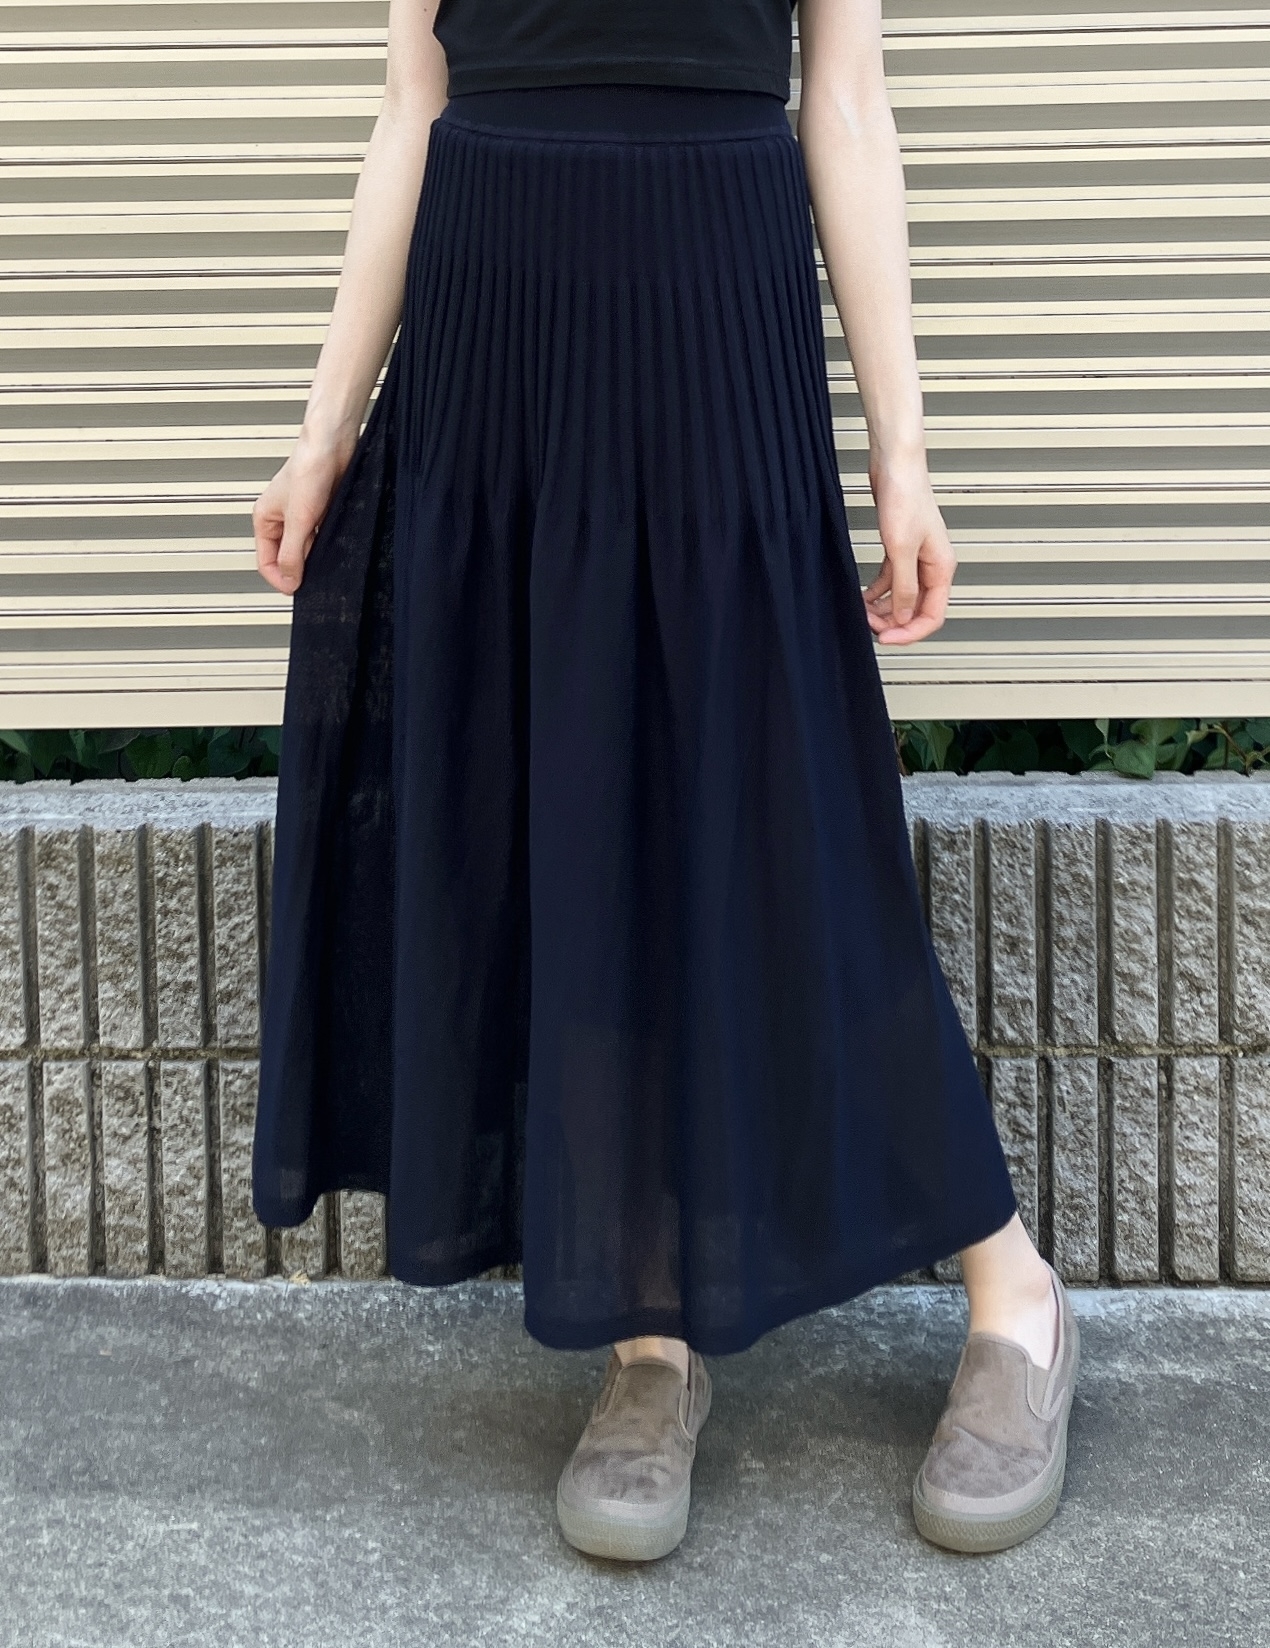 GU（ジーユー）のおすすめスカート「シアーニットフレアスカートZ+E」